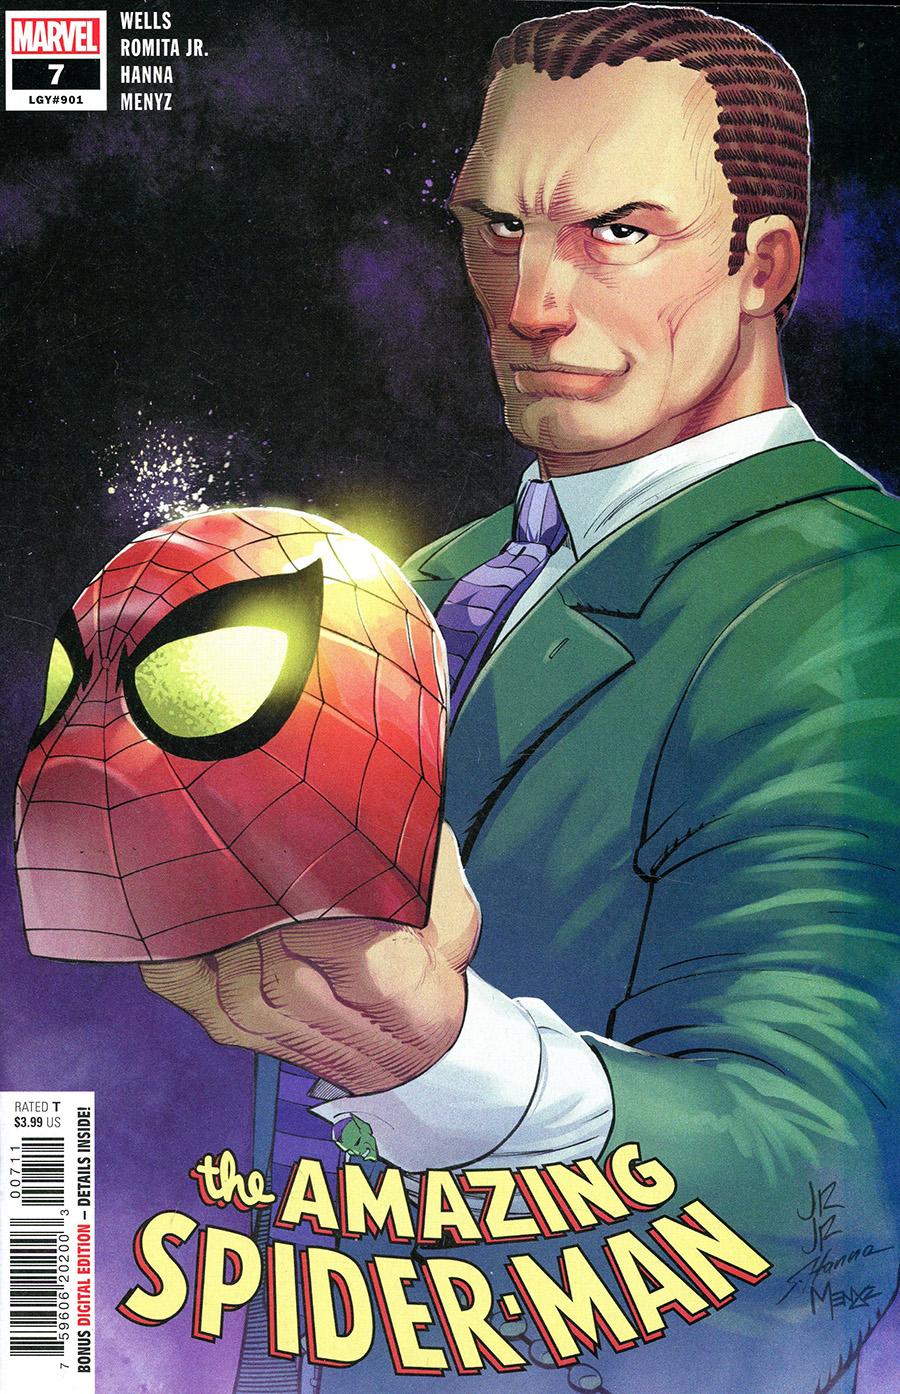 Amazing Spider-Man Vol 6 #7 Cover A Regular John Romita Jr Cover